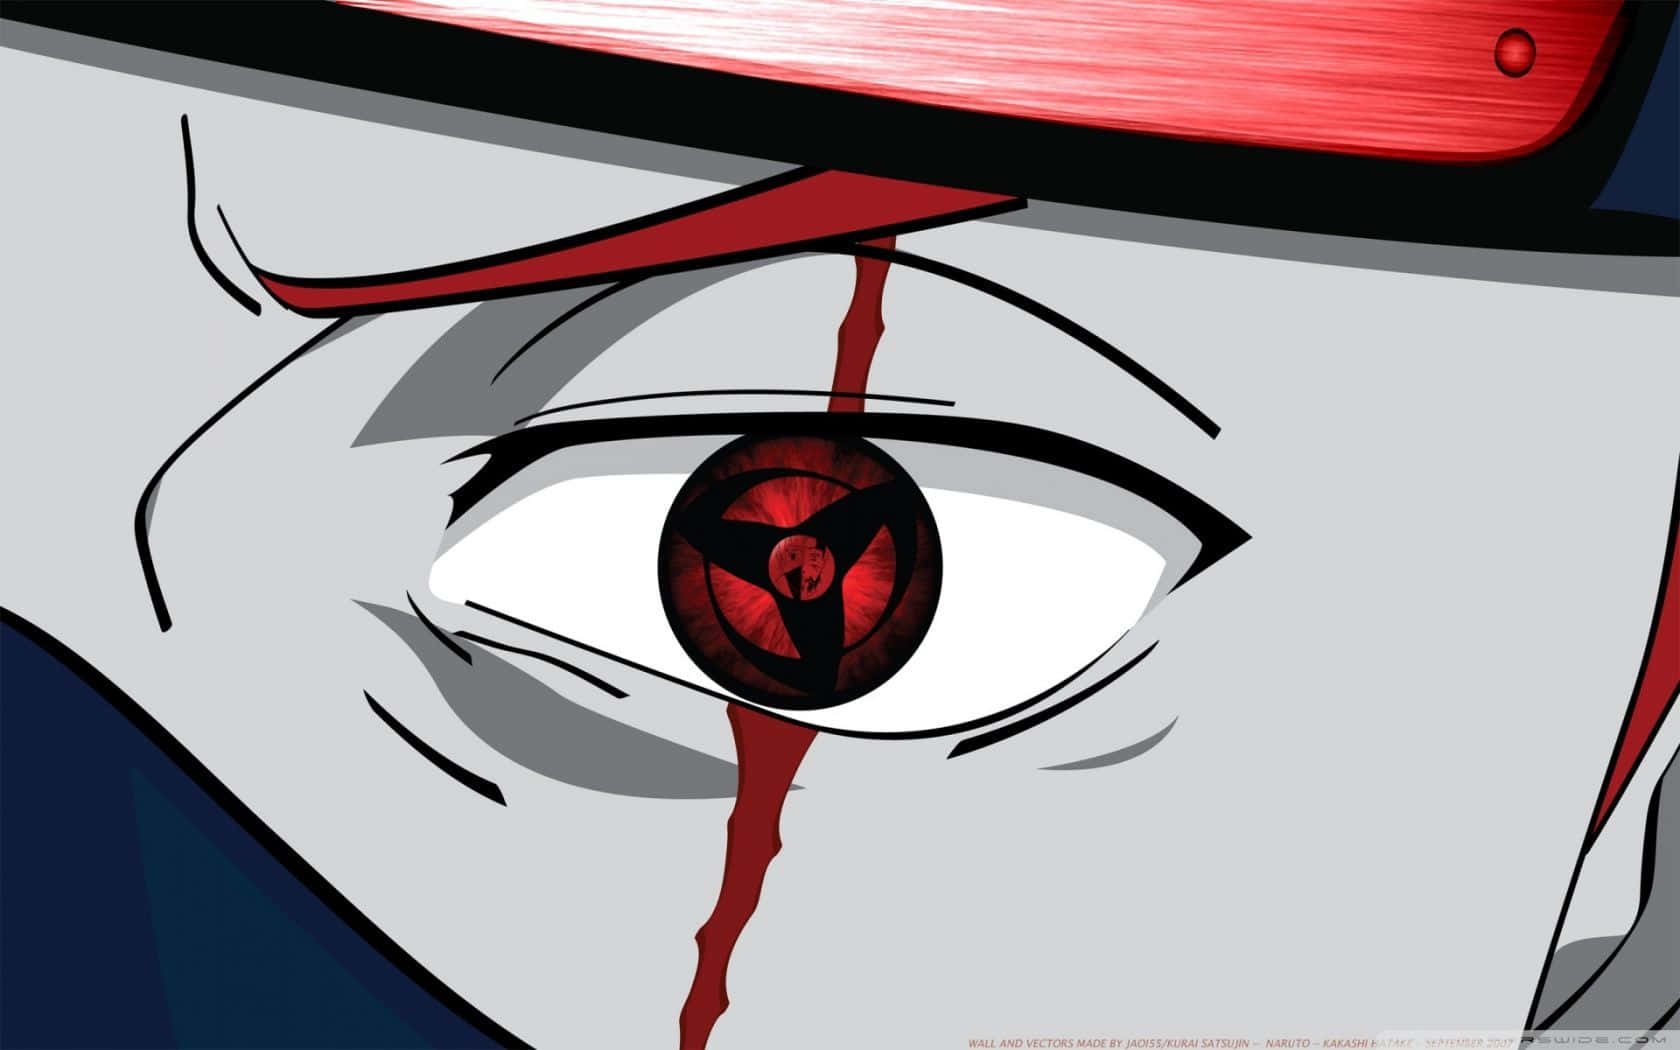 Anime Eyes  Anime naruto, Naruto eyes, Naruto drawings